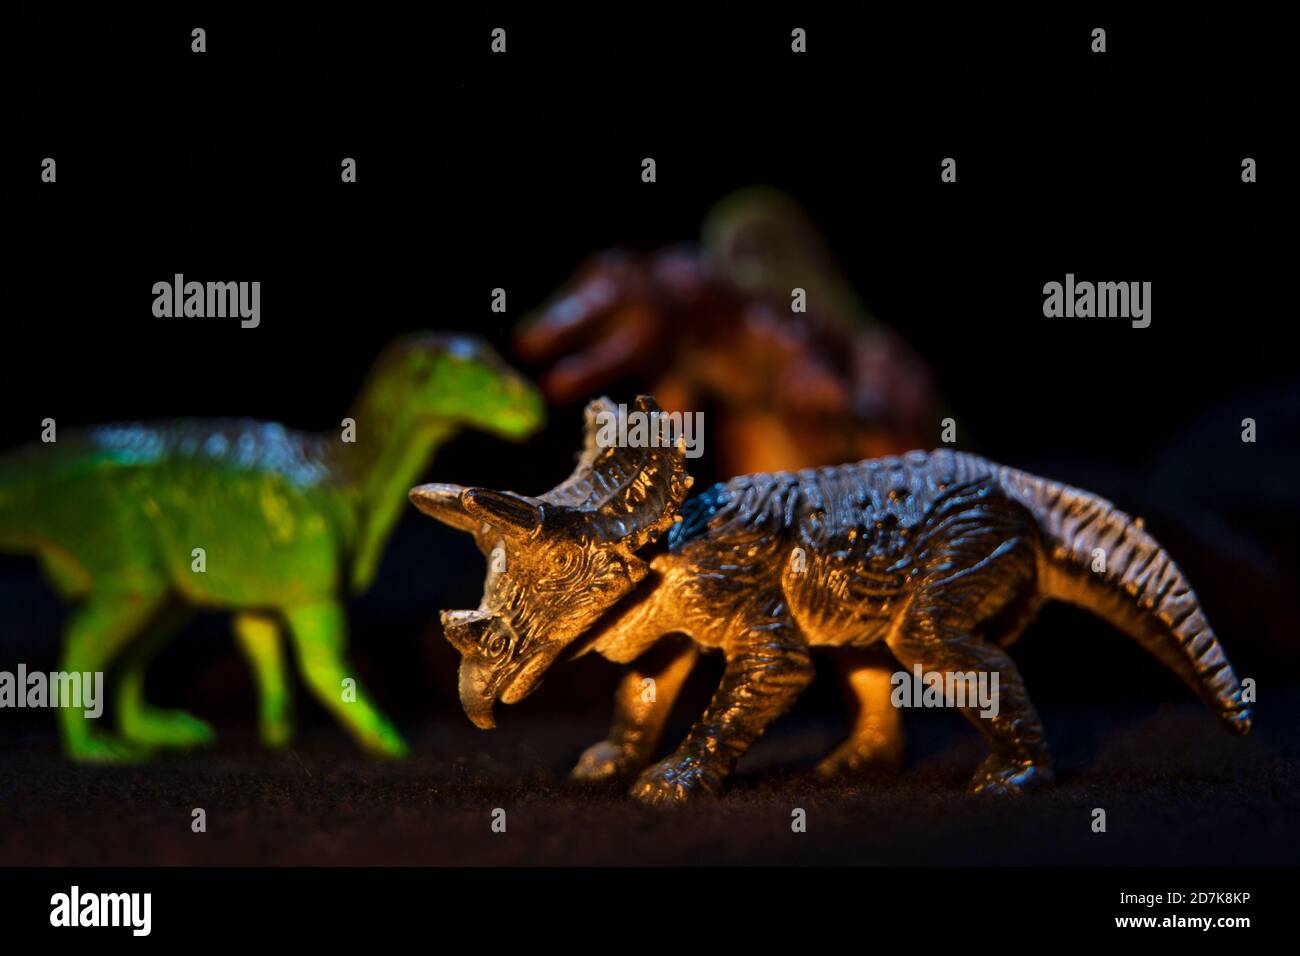 Detail of dinosaur figures on black background Stock Photo